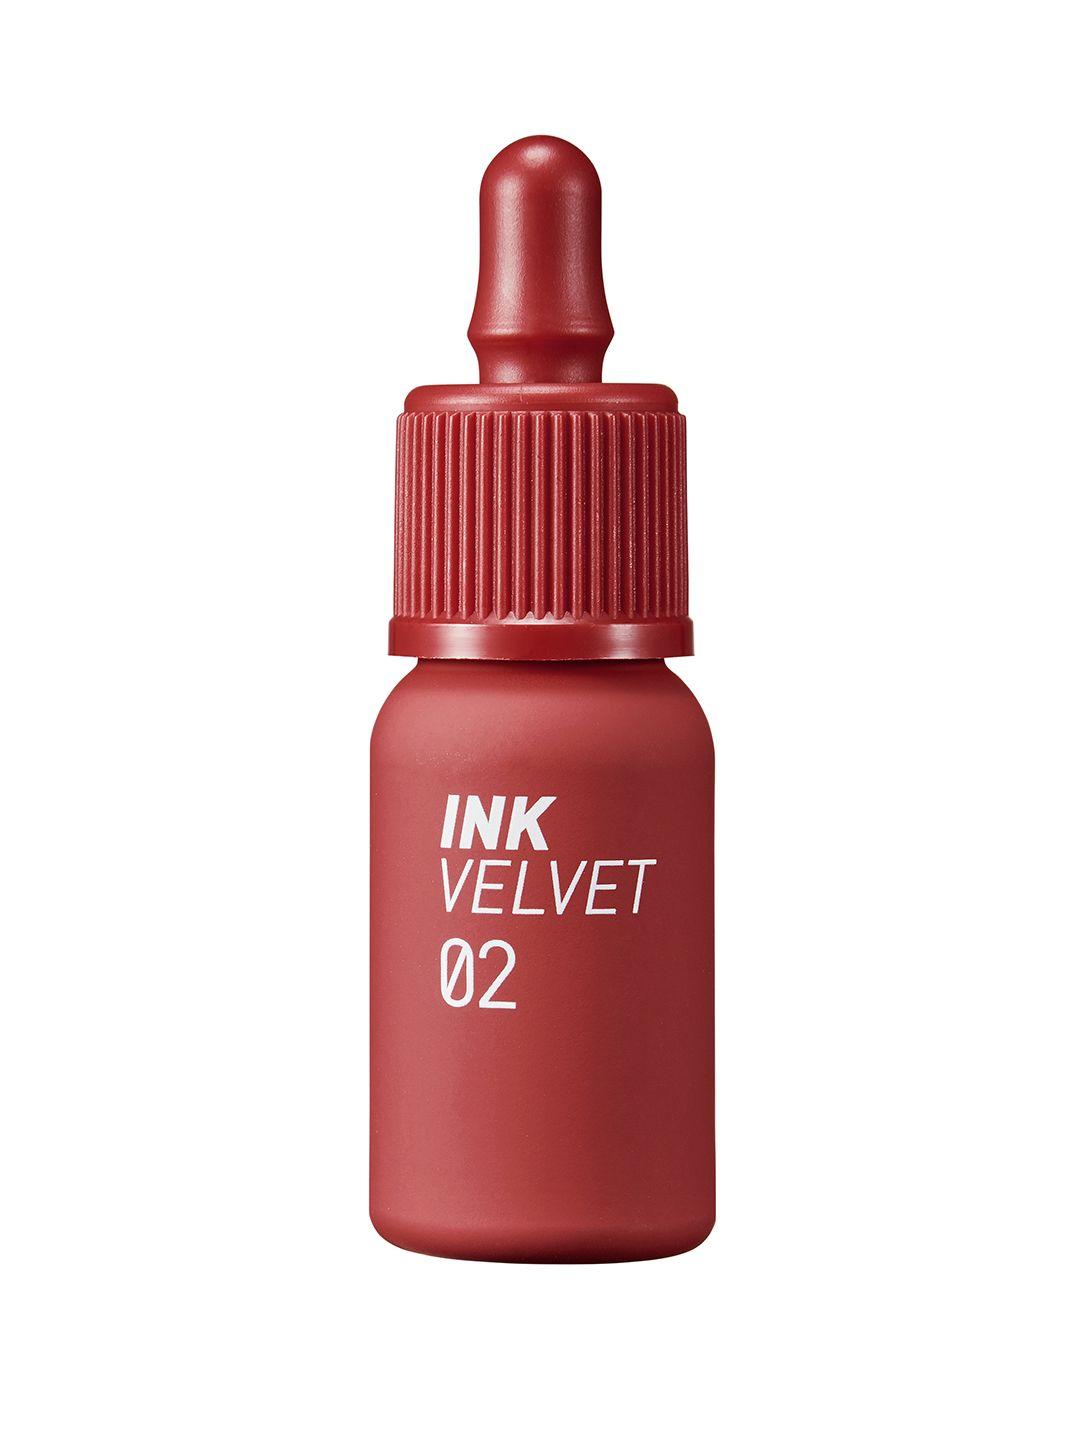 peripera ink velvet liquid lipstick 4g - celeb deep rose 02